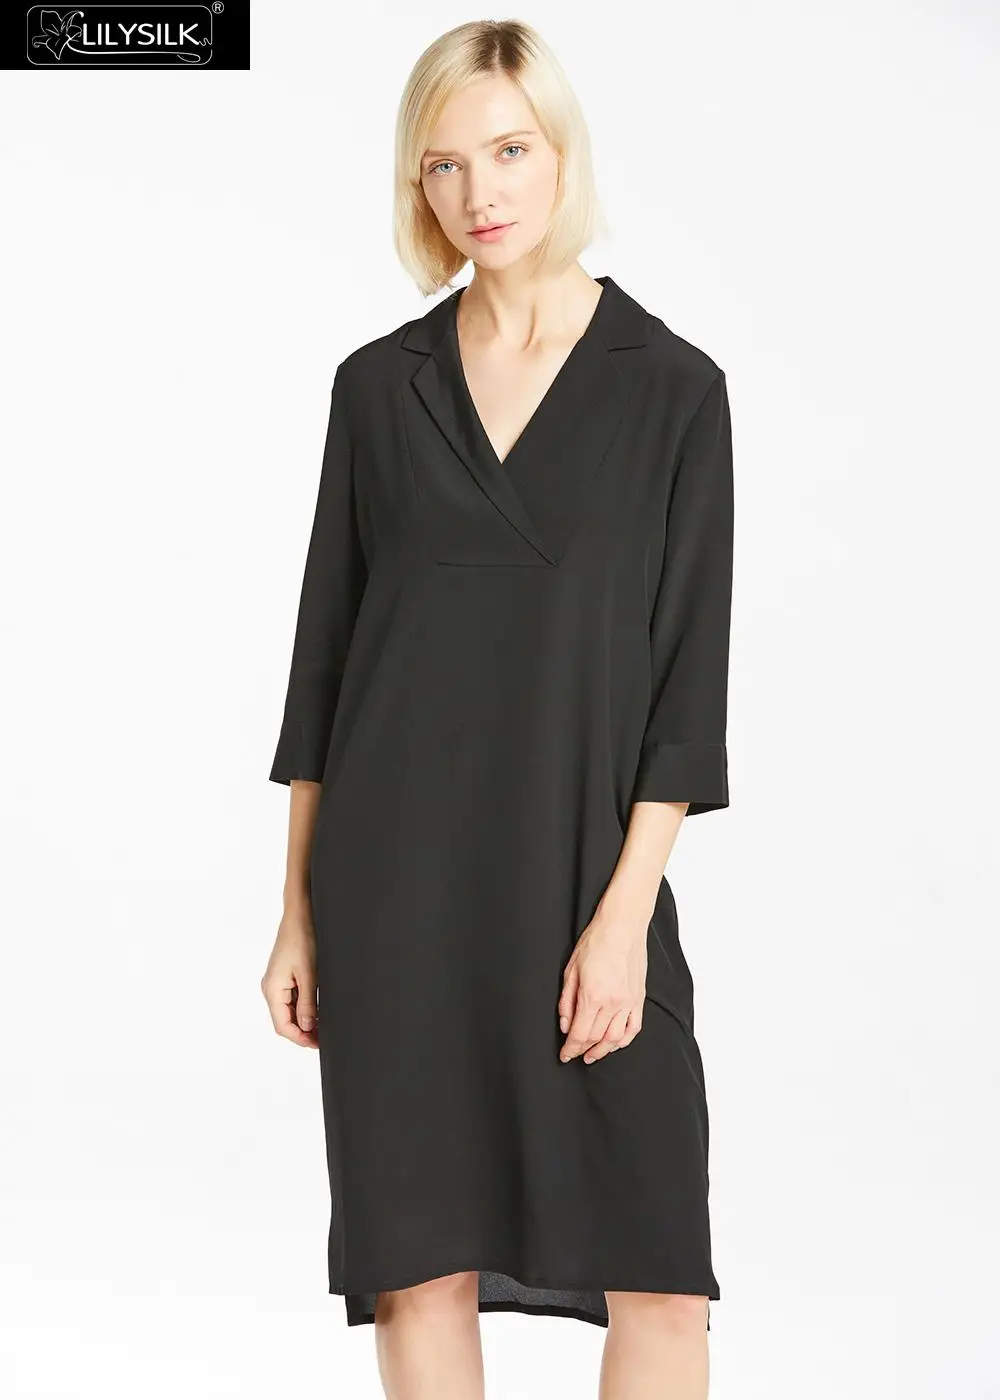 LilySilk платье с коротким рукавом Туника шелковая Распродажа